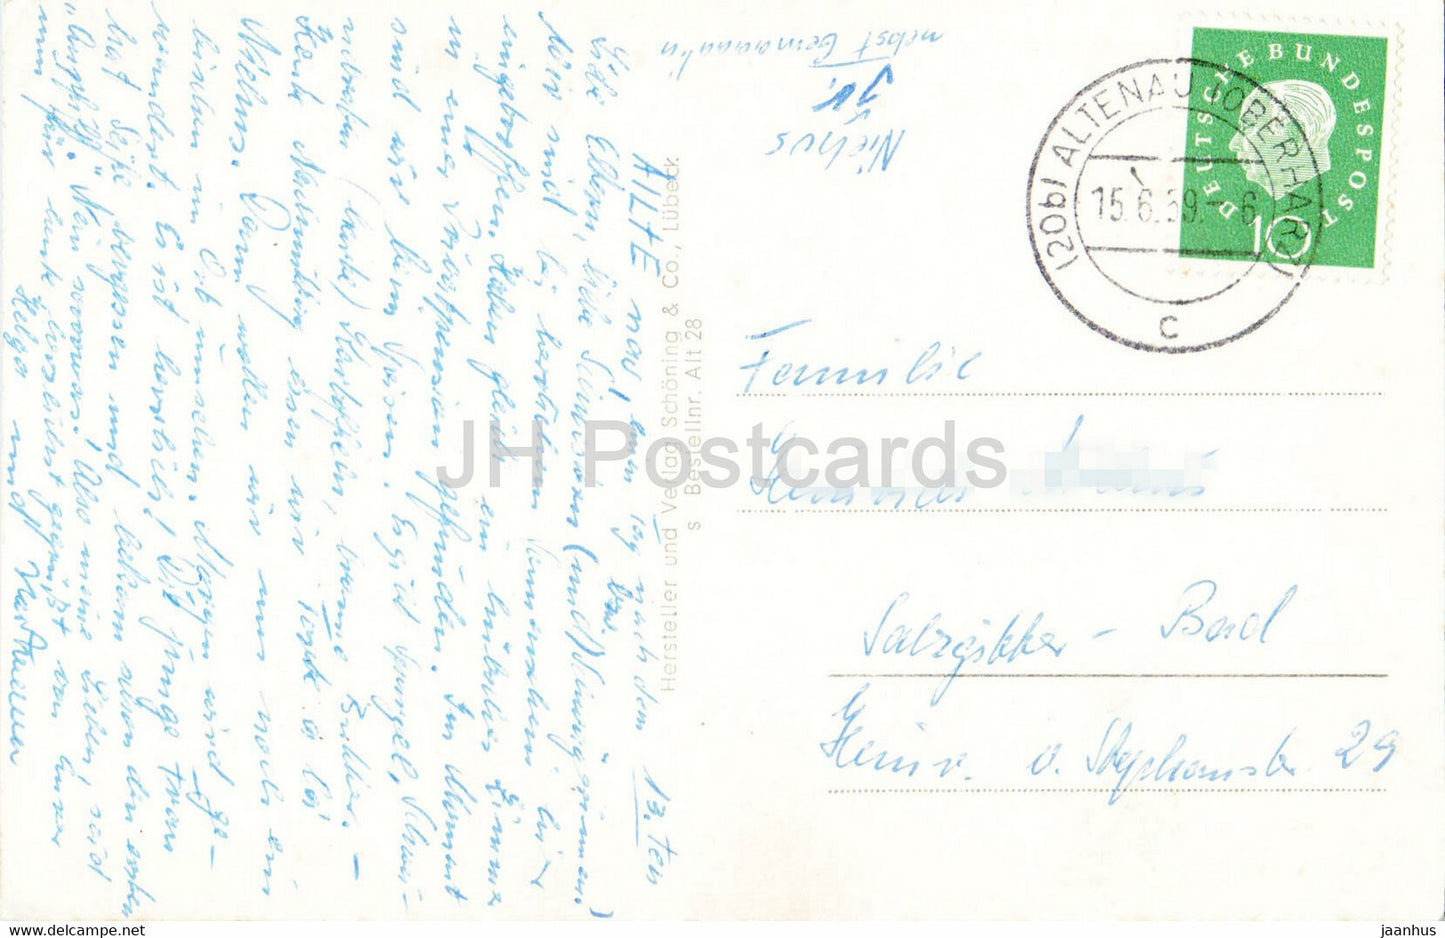 Altenau Oberharz - Partie am Dammgraben - old postcard - 1959 - Germany - used